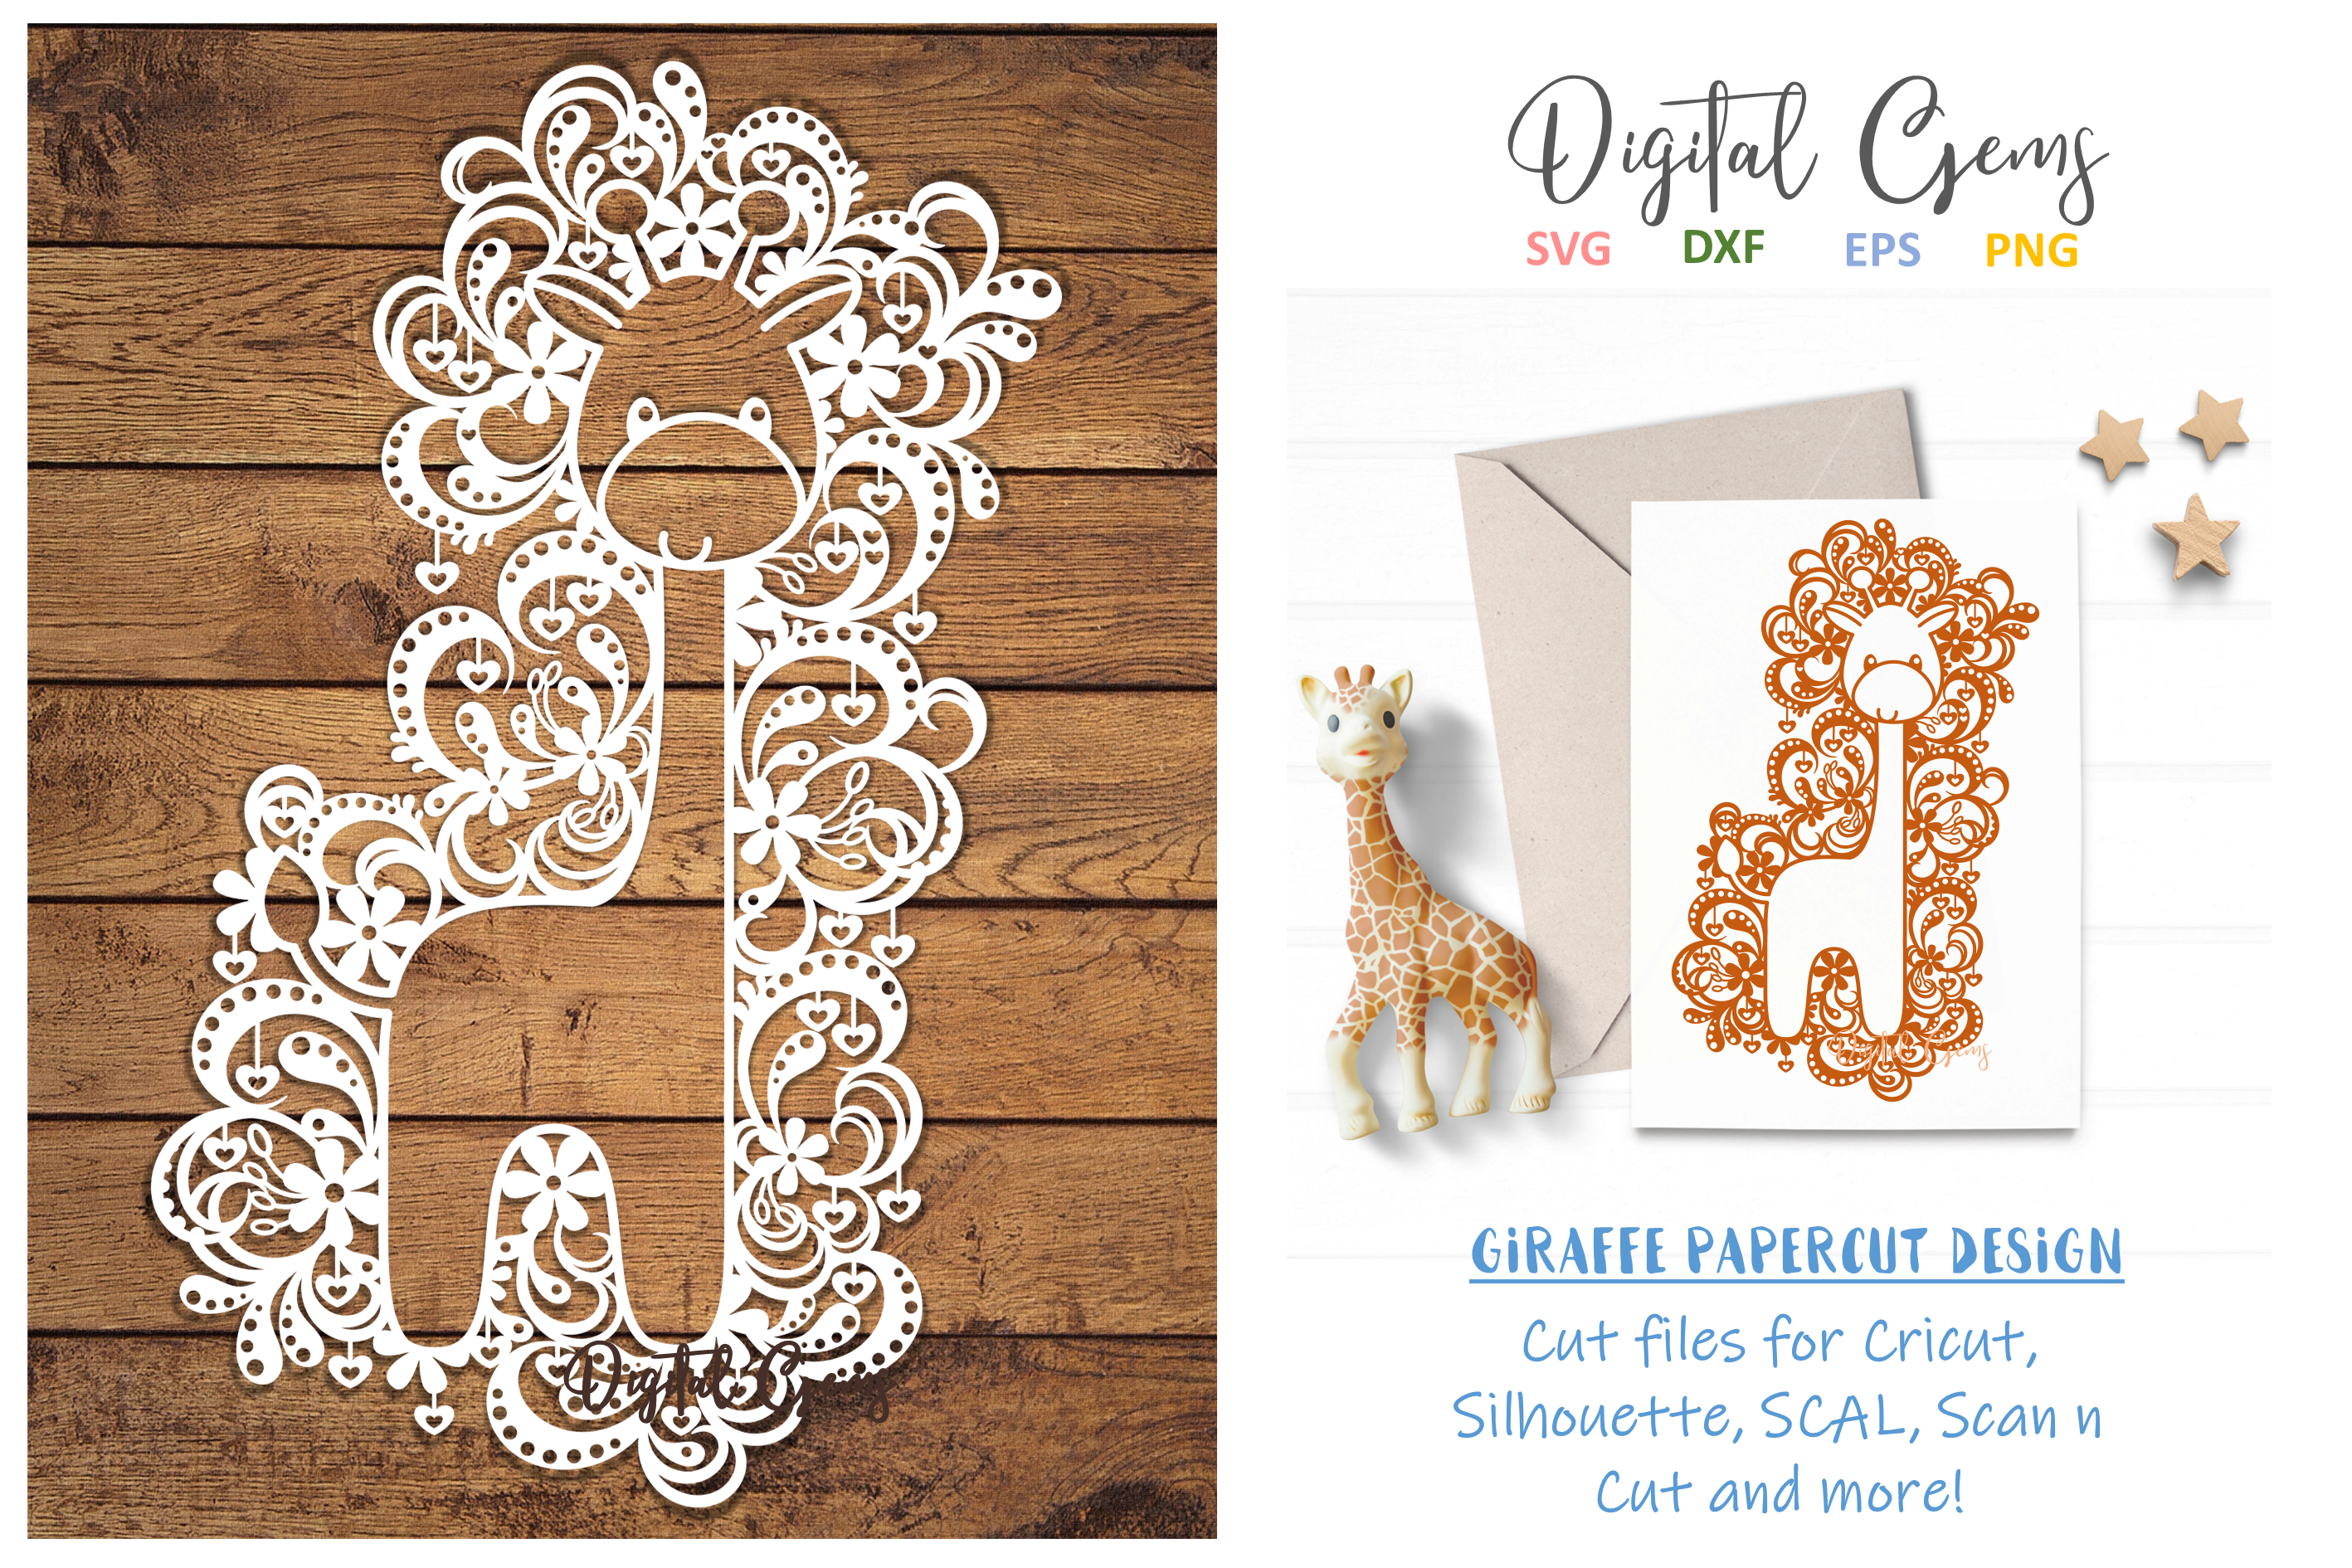 Download Giraffe paper cut design SVG / DXF / EPS files